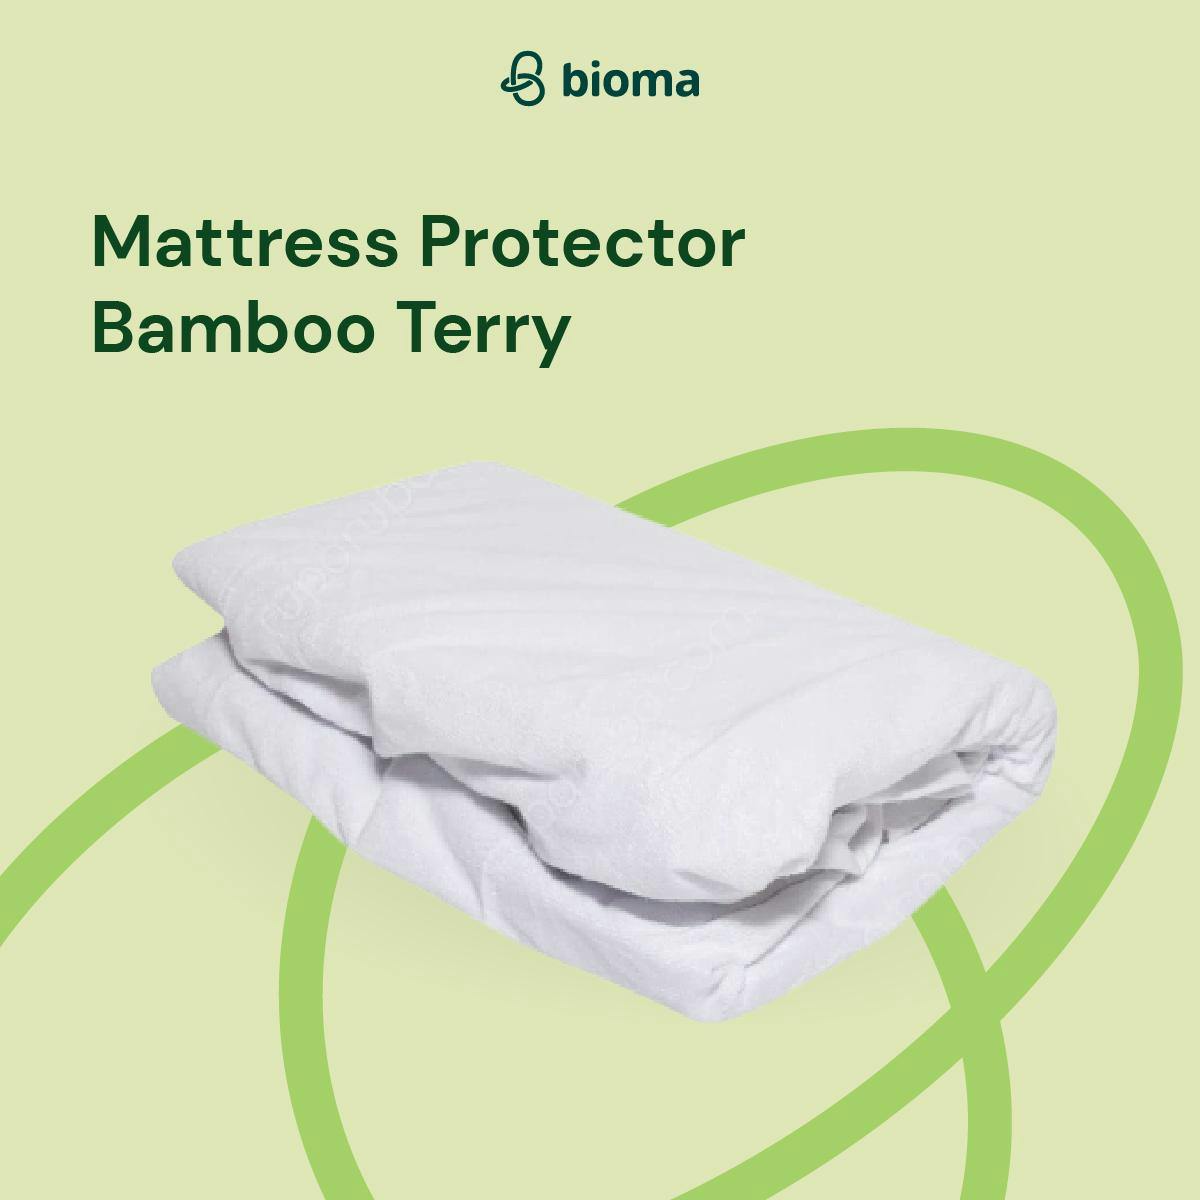 Mattress Protector Bamboo Terry